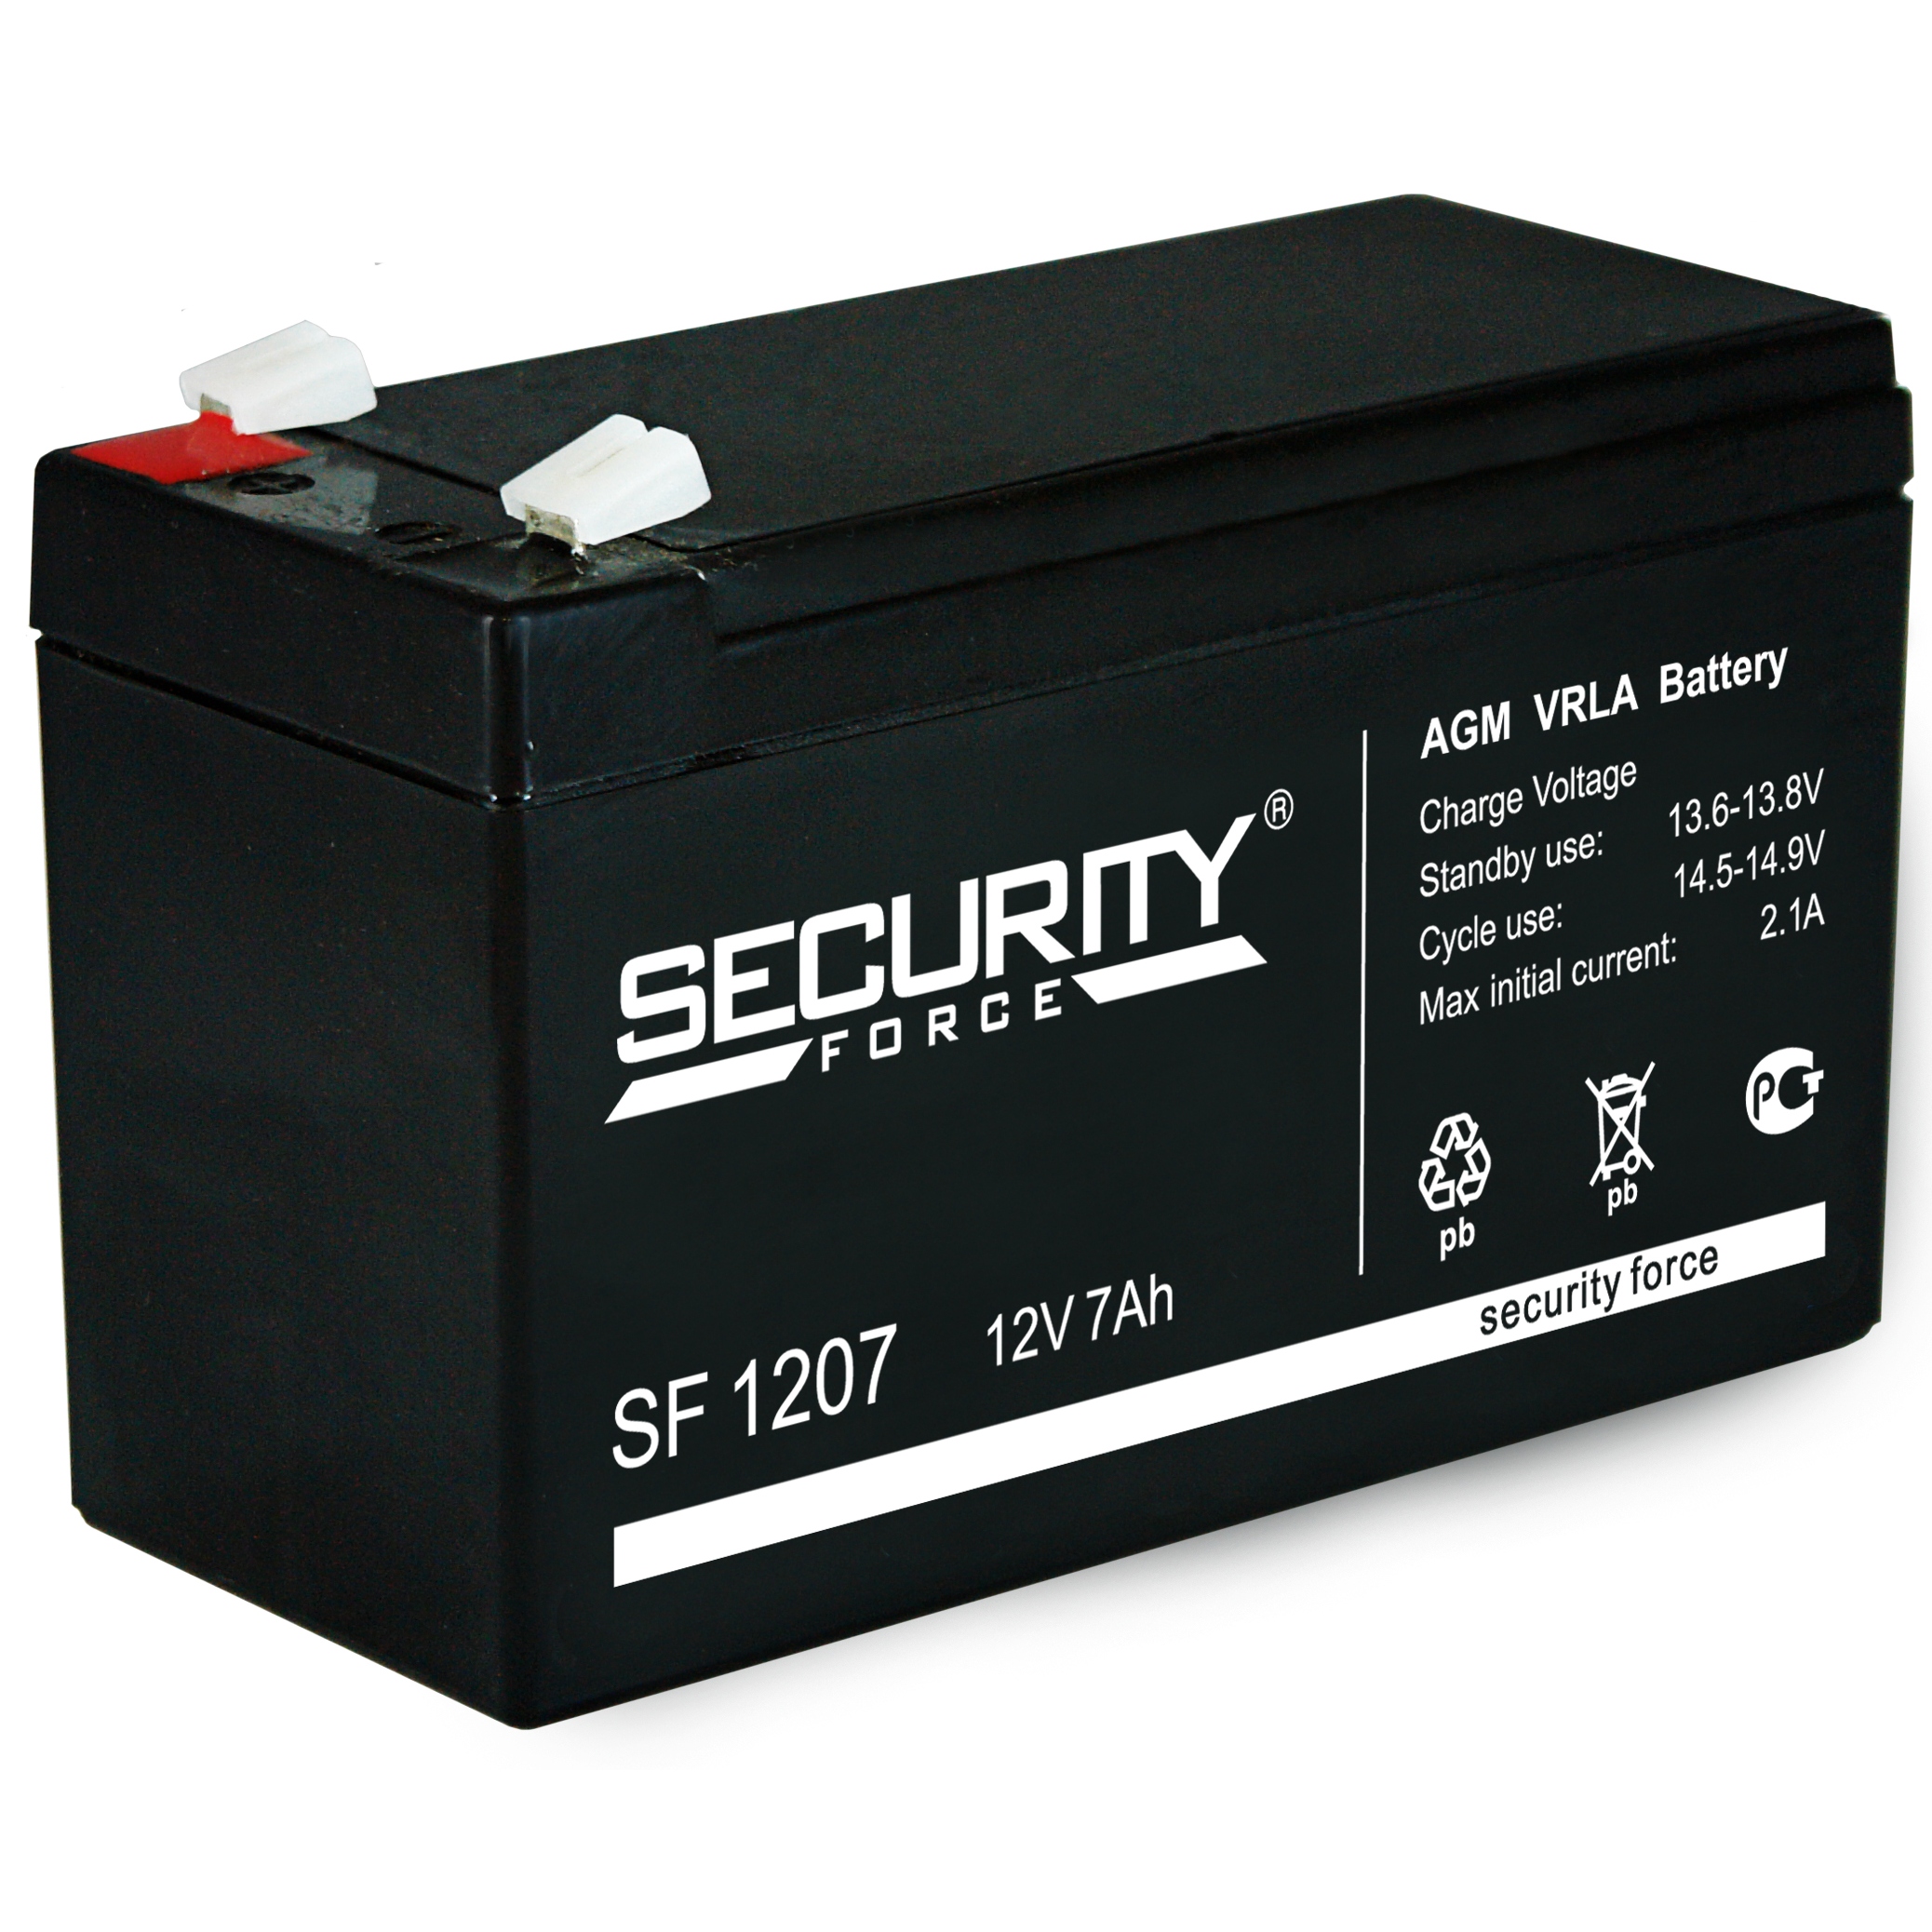  Security Force SF 1207 (SF 1207)                                                7ah 12V -    